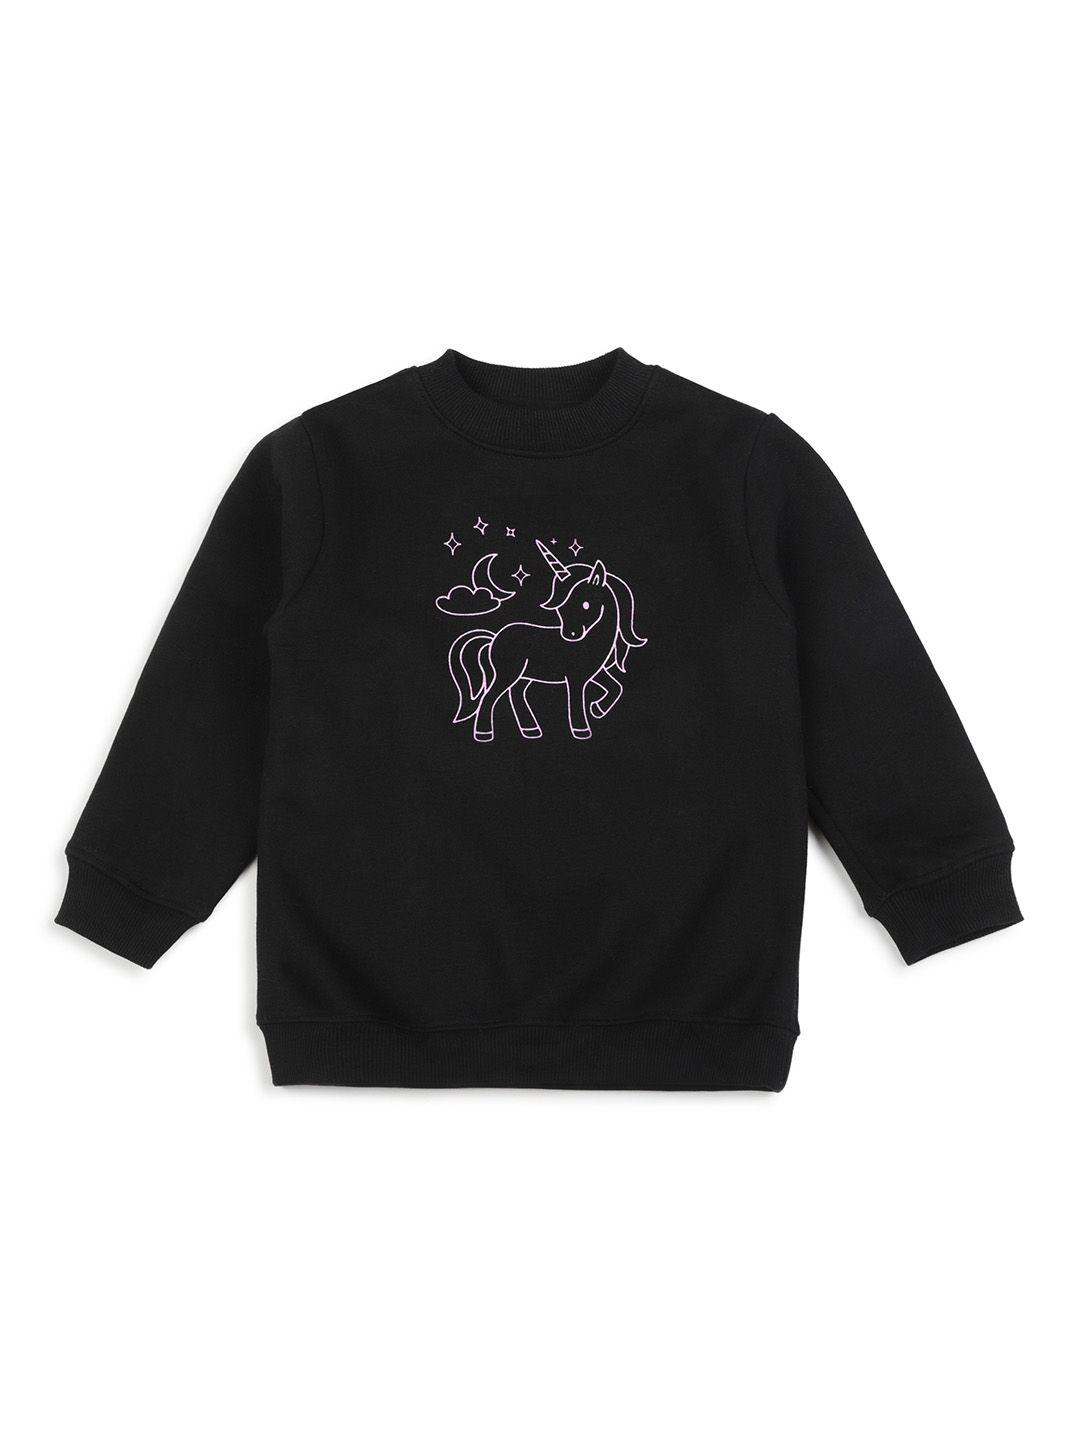 shopbloom-kids-graphic-printed-cotton-pullover-sweatshirt